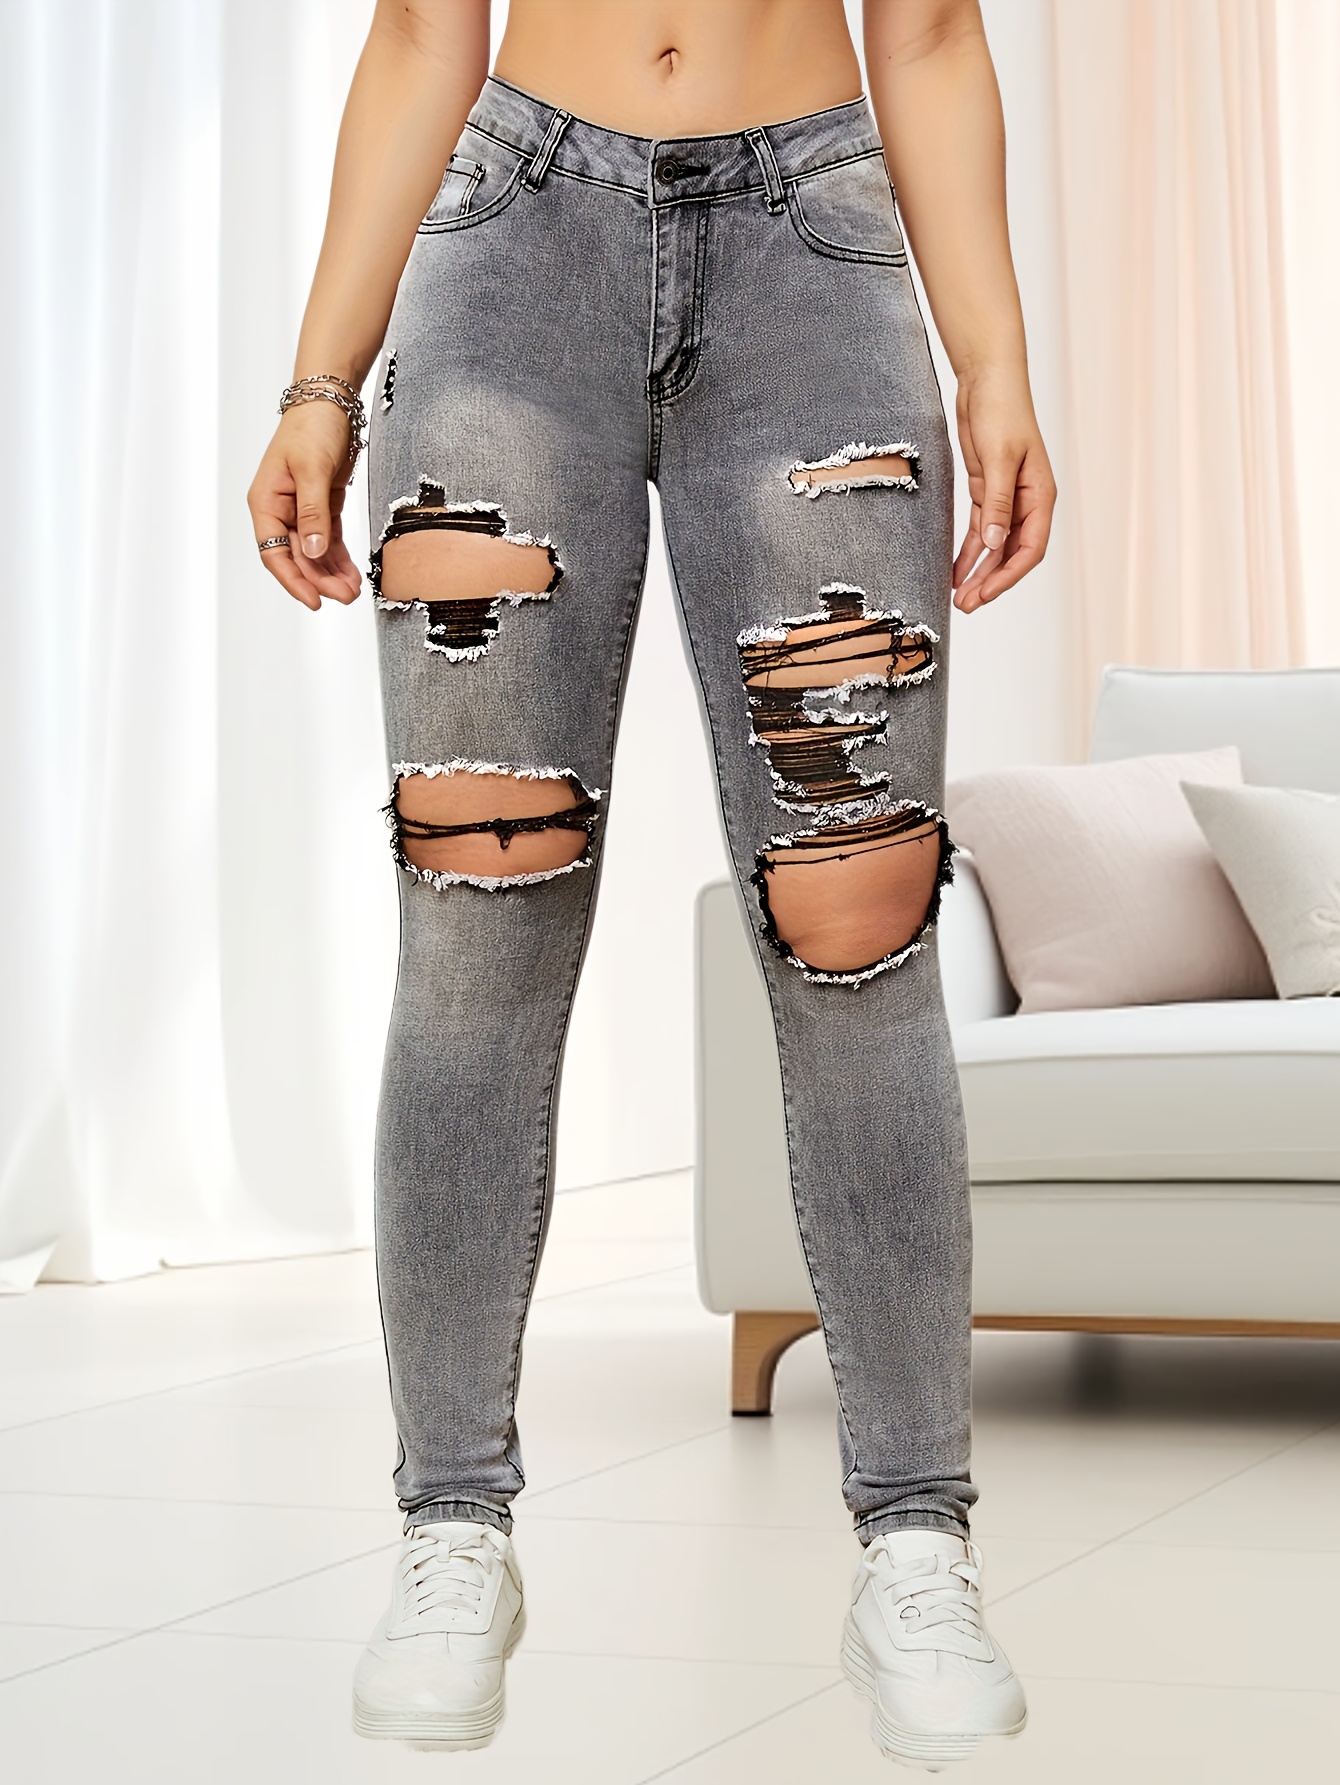 Women's Grey Jeans & Denim Clothing: Shop Online